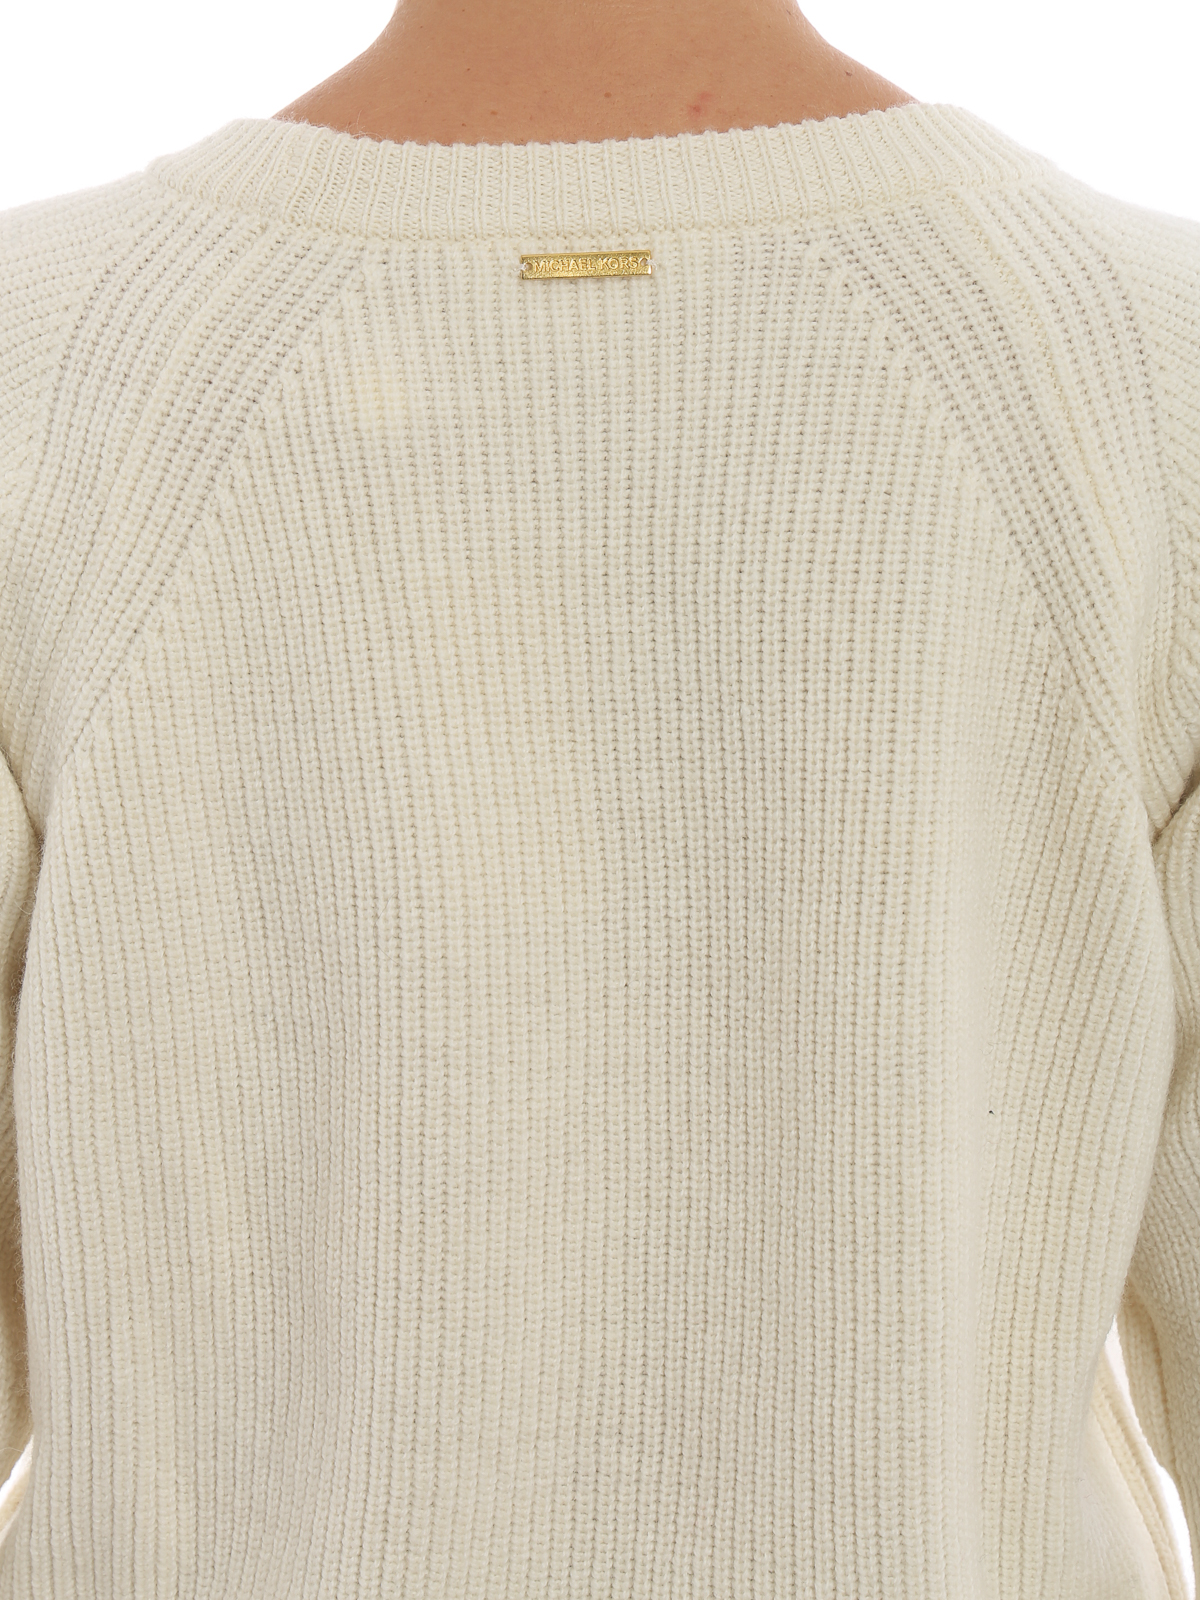 michael kors knit sweater